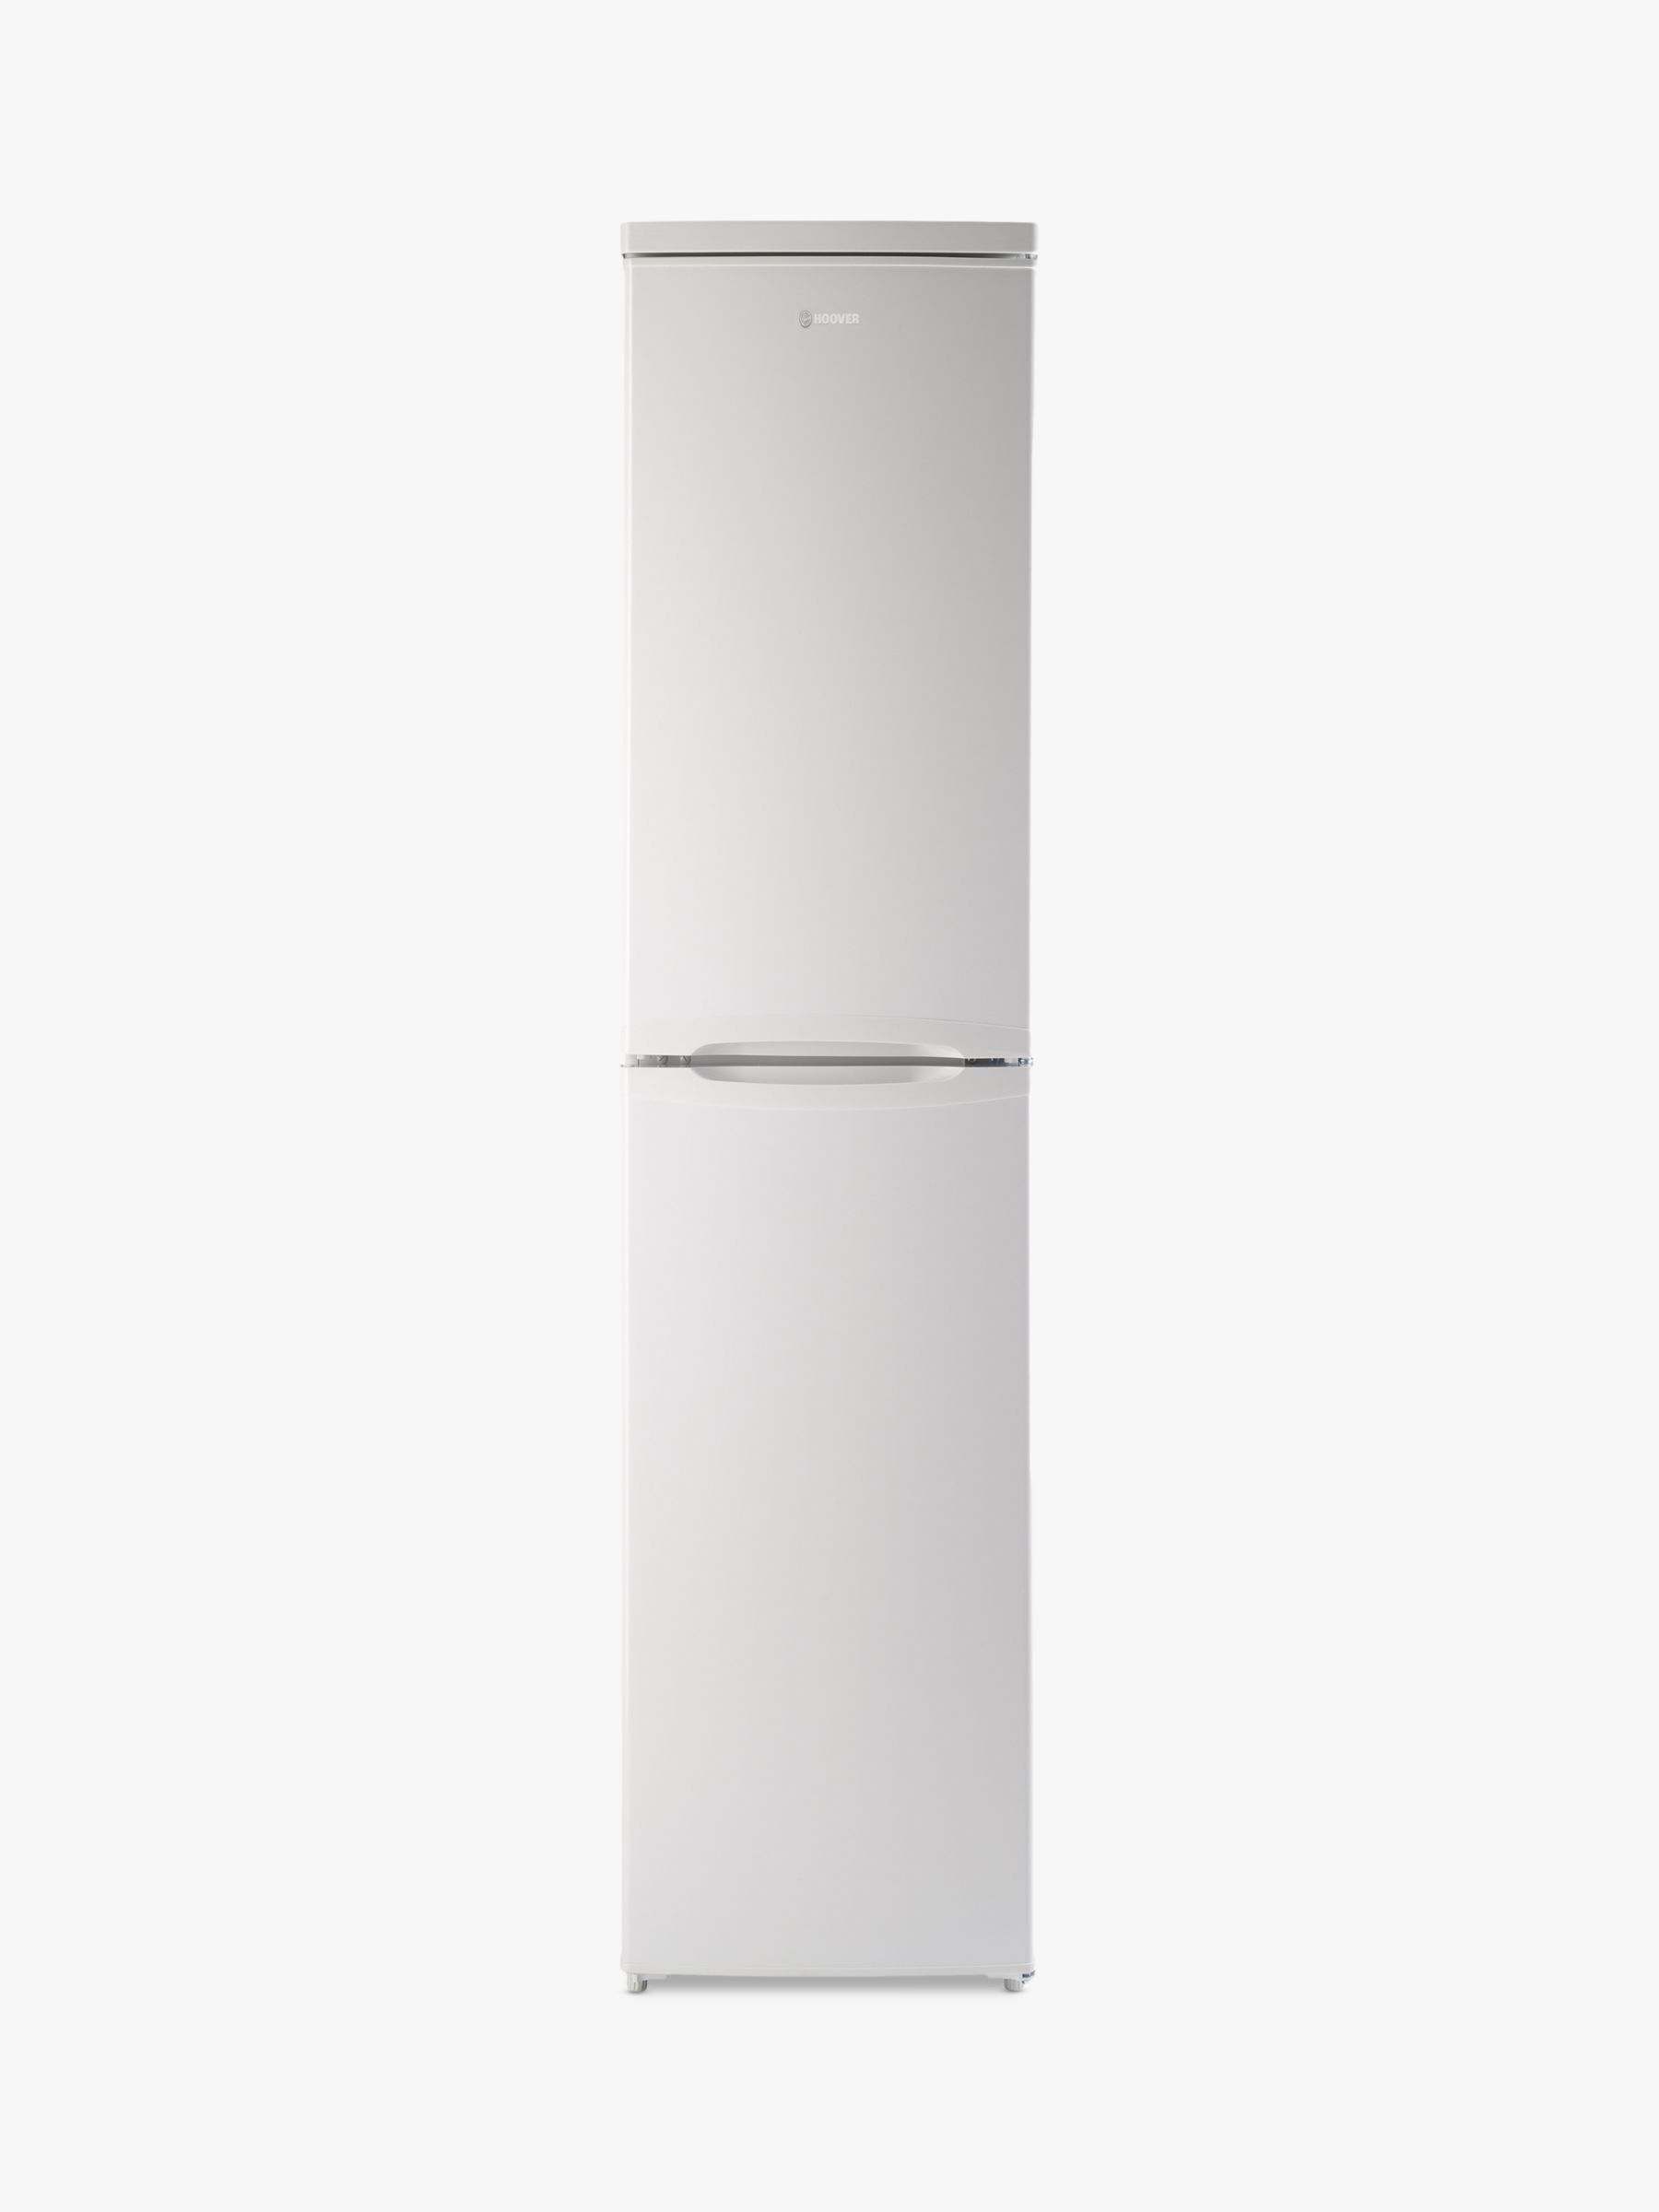 Hoover HVBS5162 Fridge Freezer, A+ Energy Rating, 55cm Wide